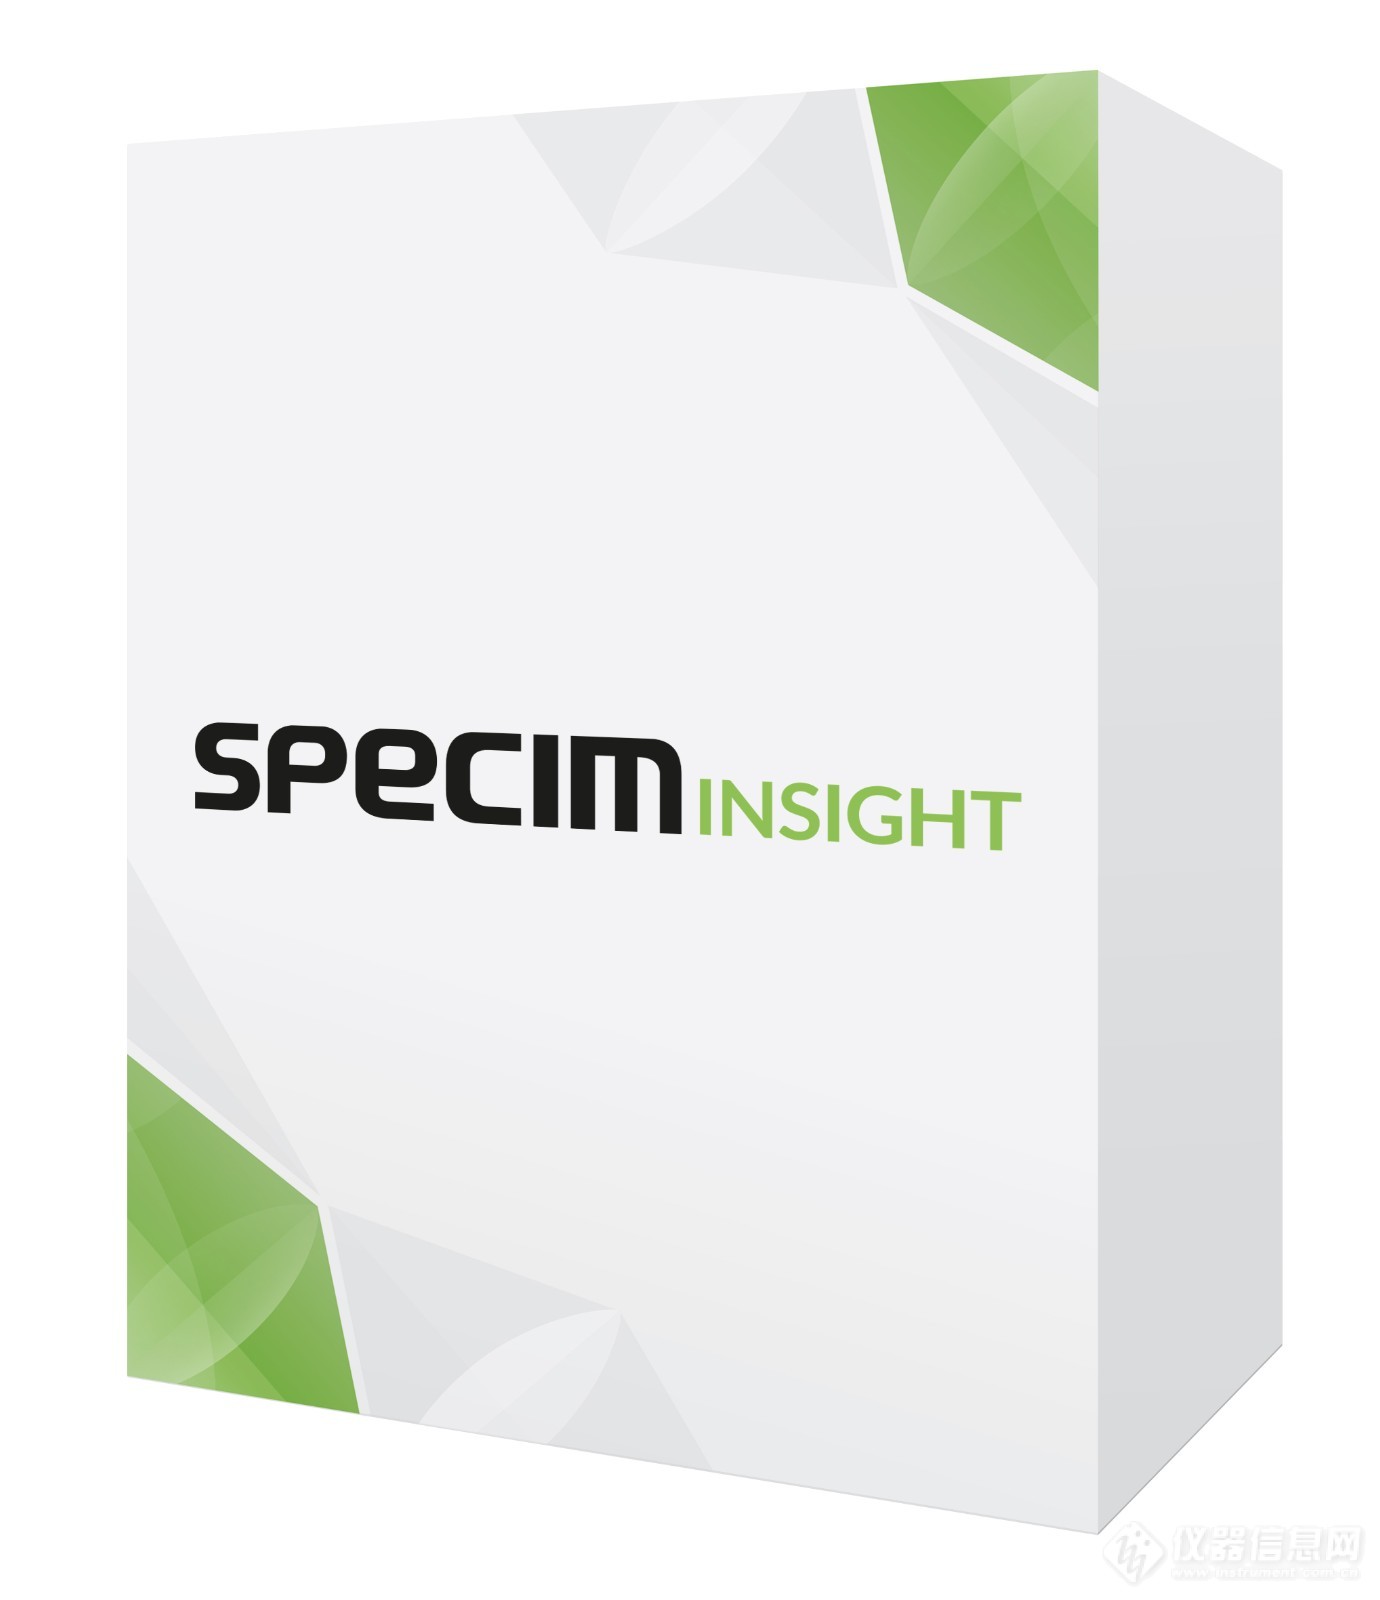 Specim-Insight-Box-修.jpg